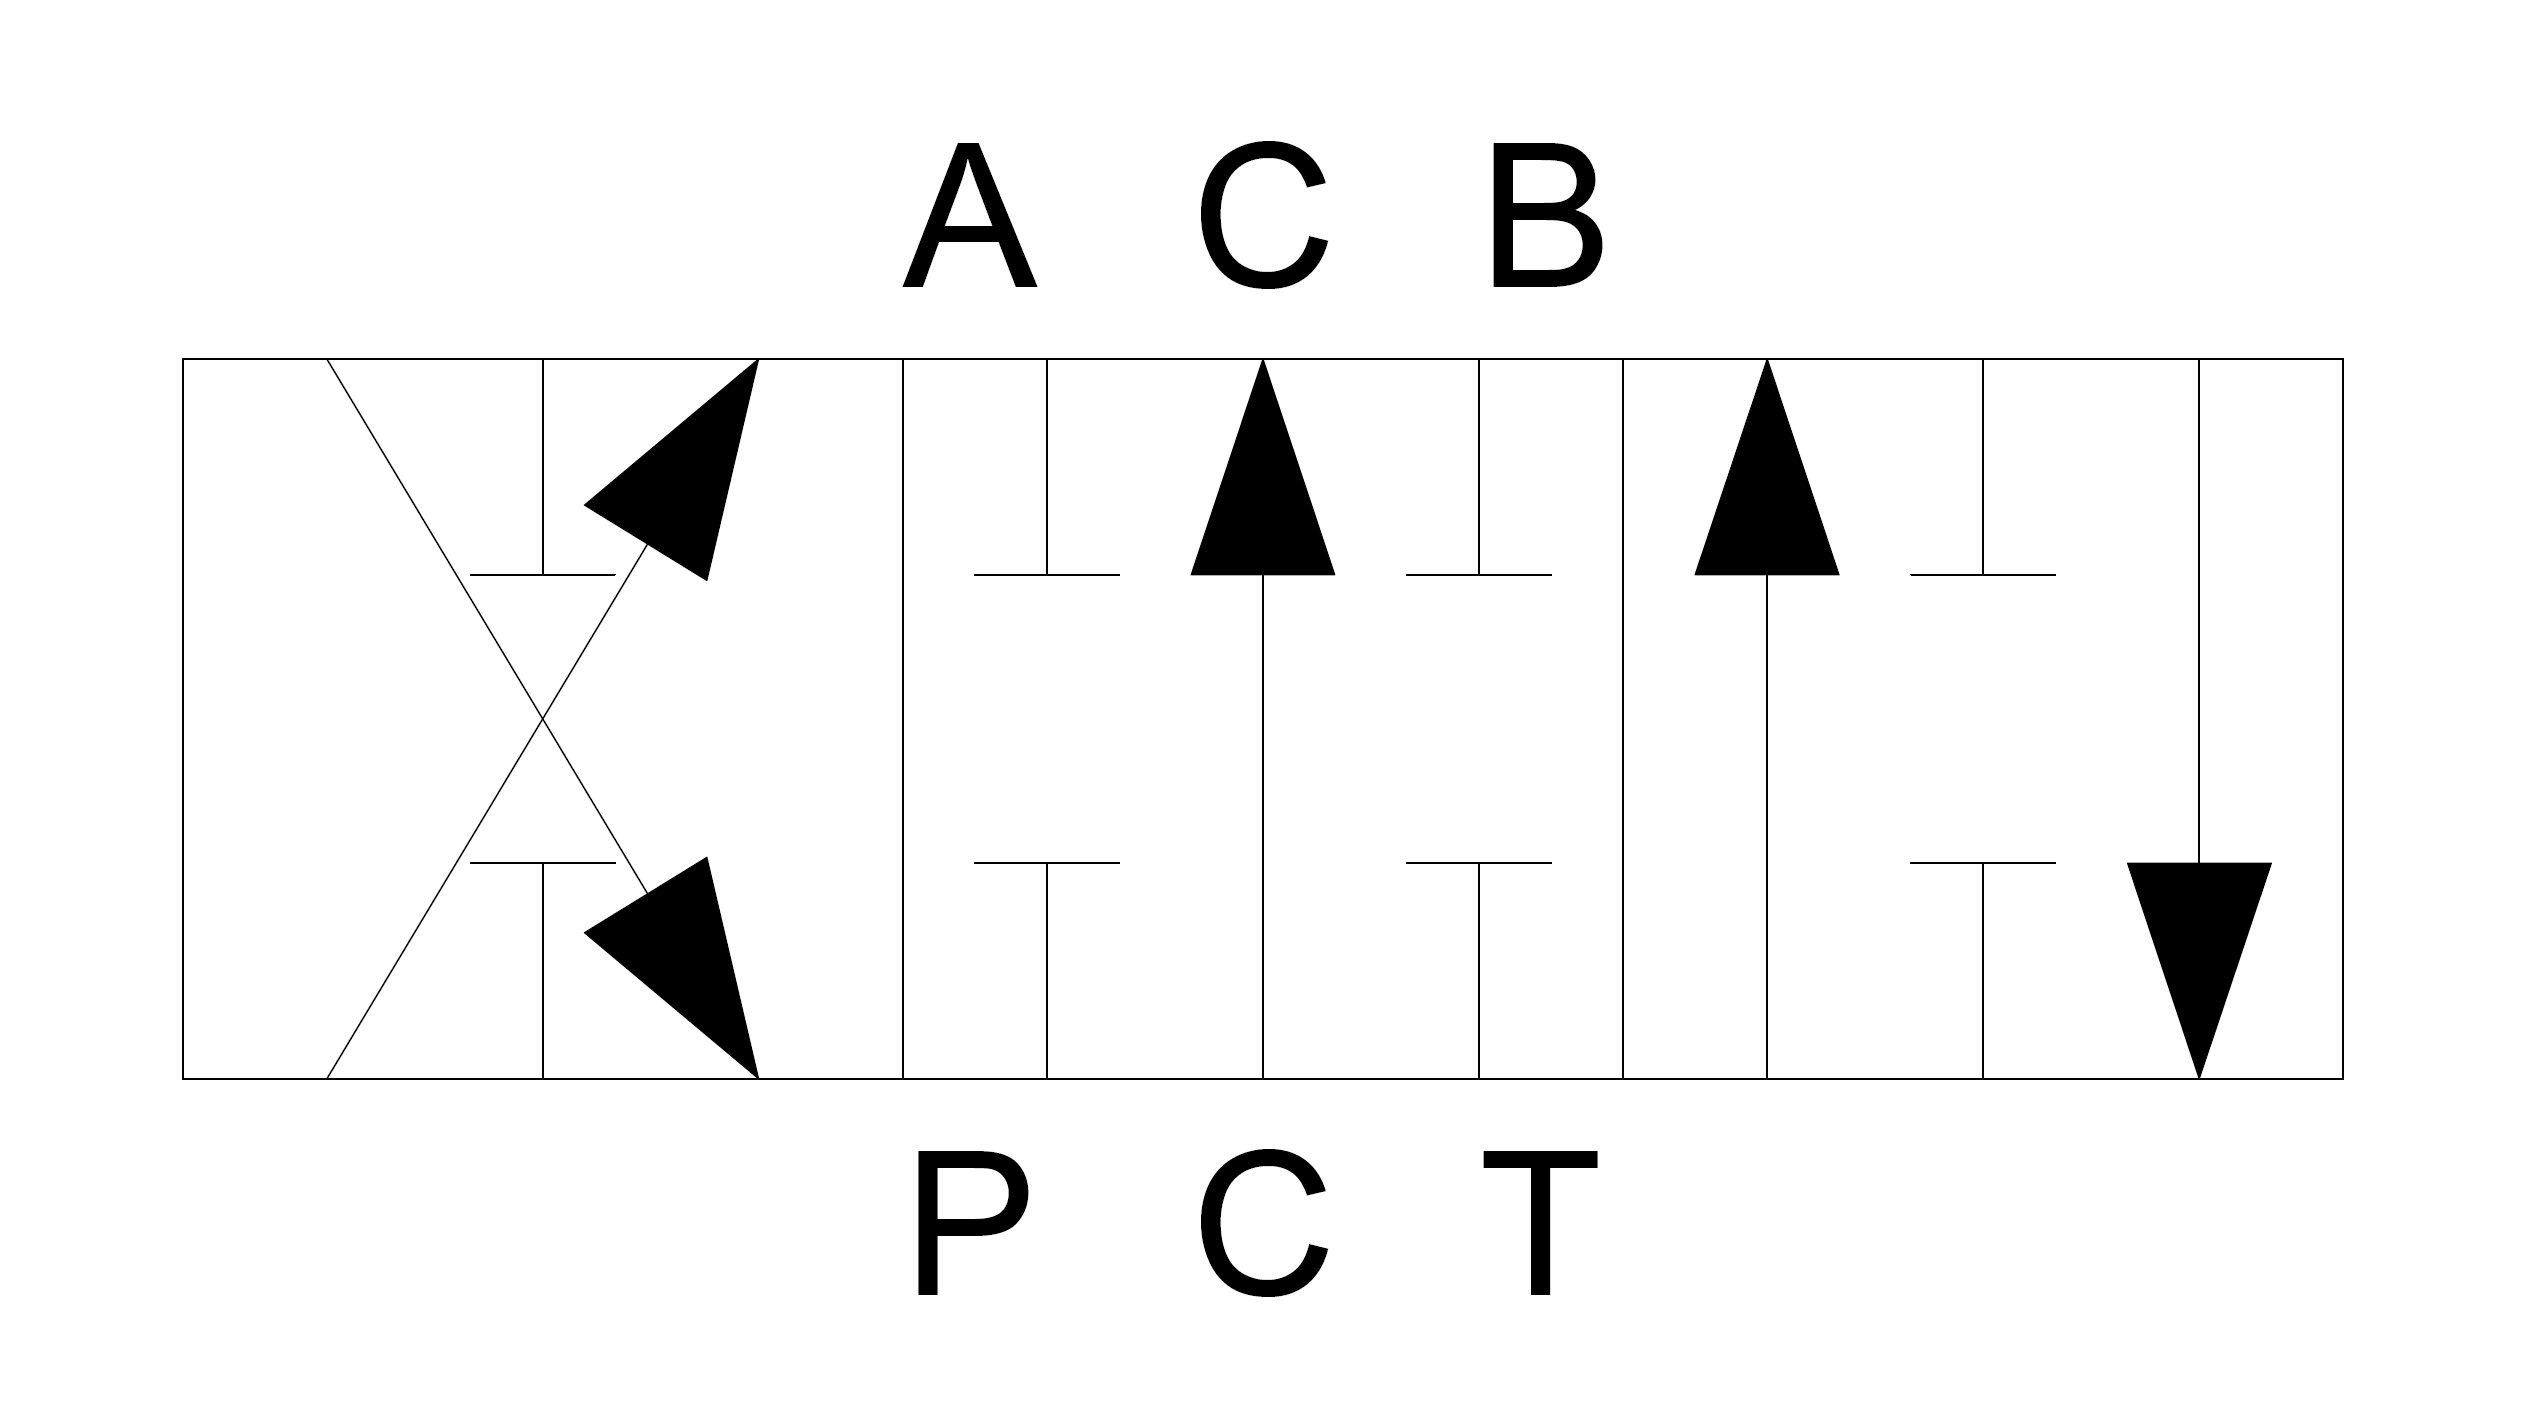 Six-way three-positoin directional control symbol